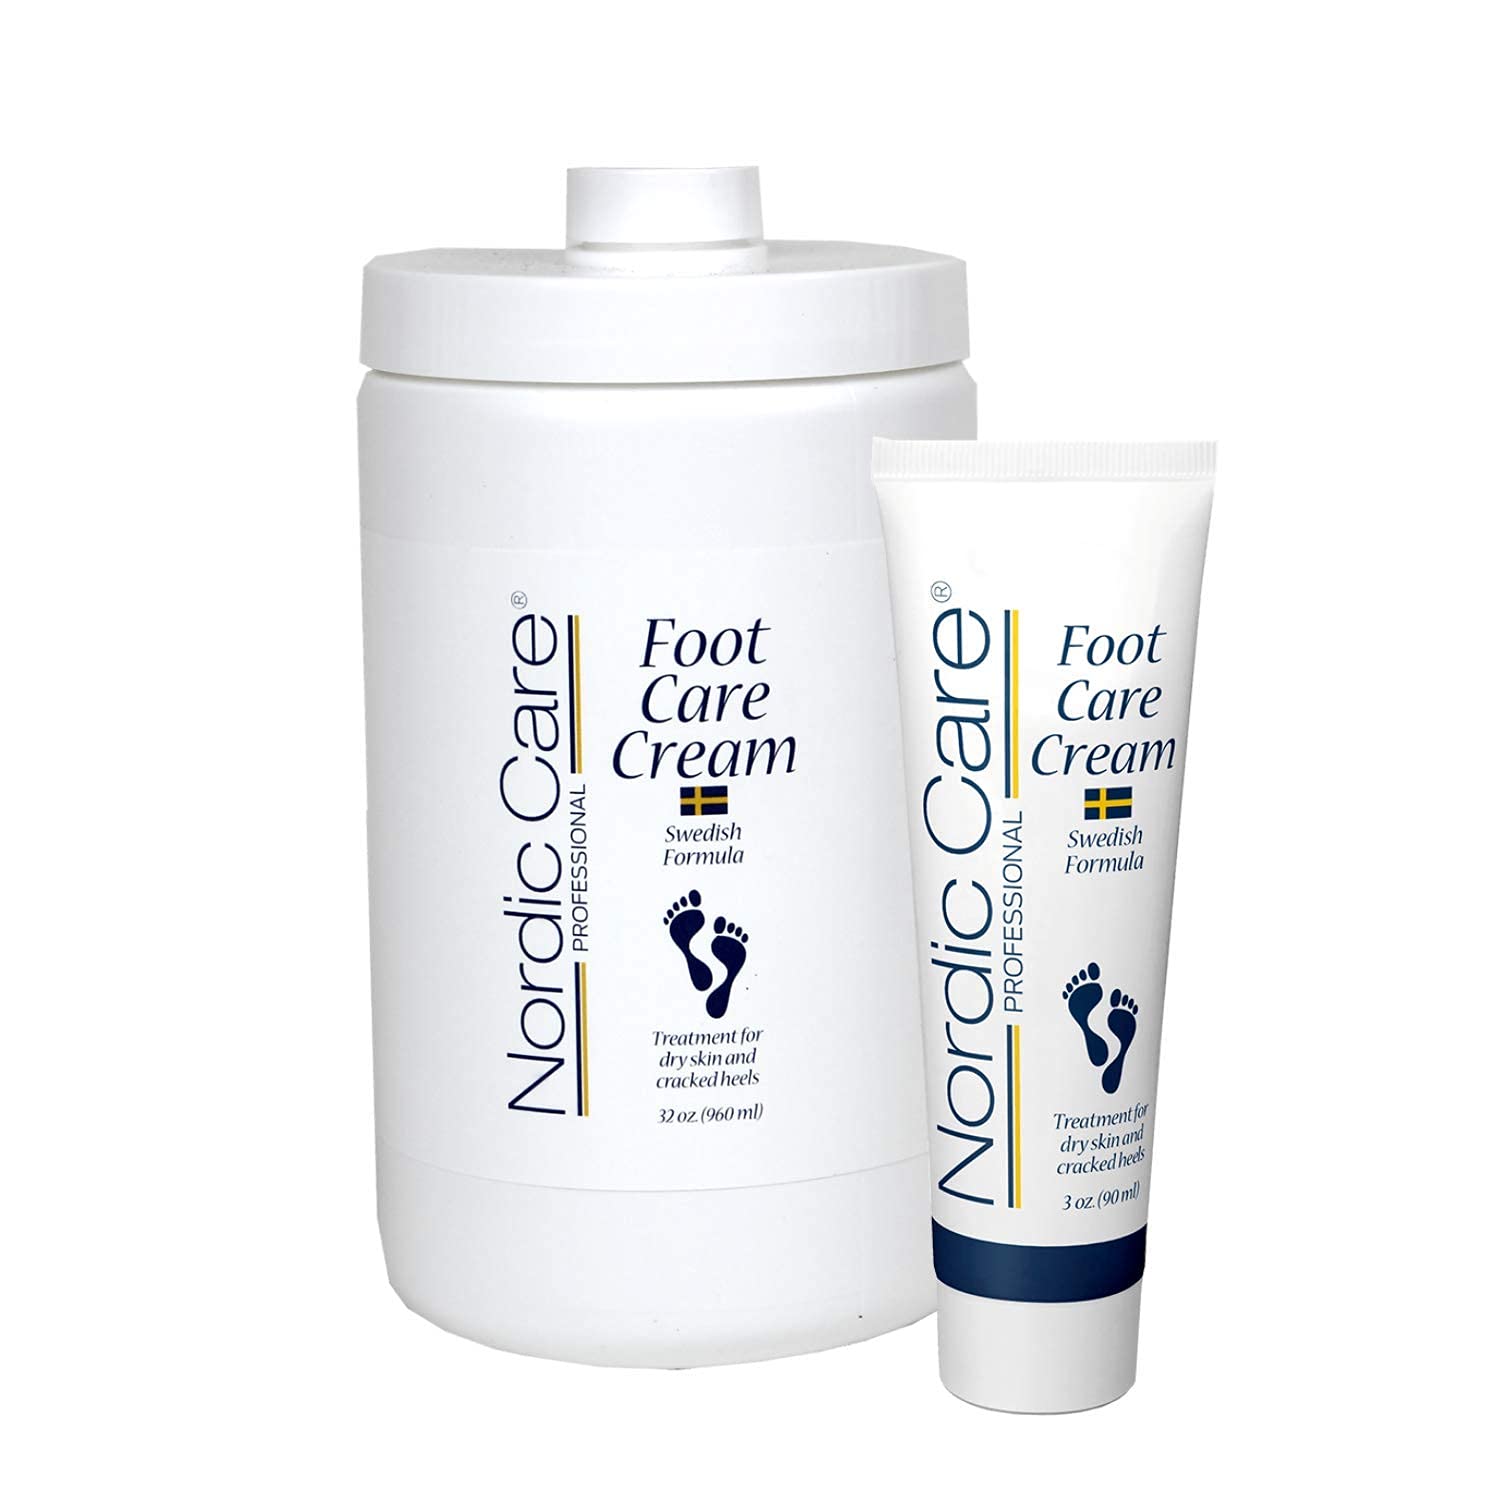 Nordic Care Foot Care Cream 32 oz and 3 oz Foot Care Cream Bundle